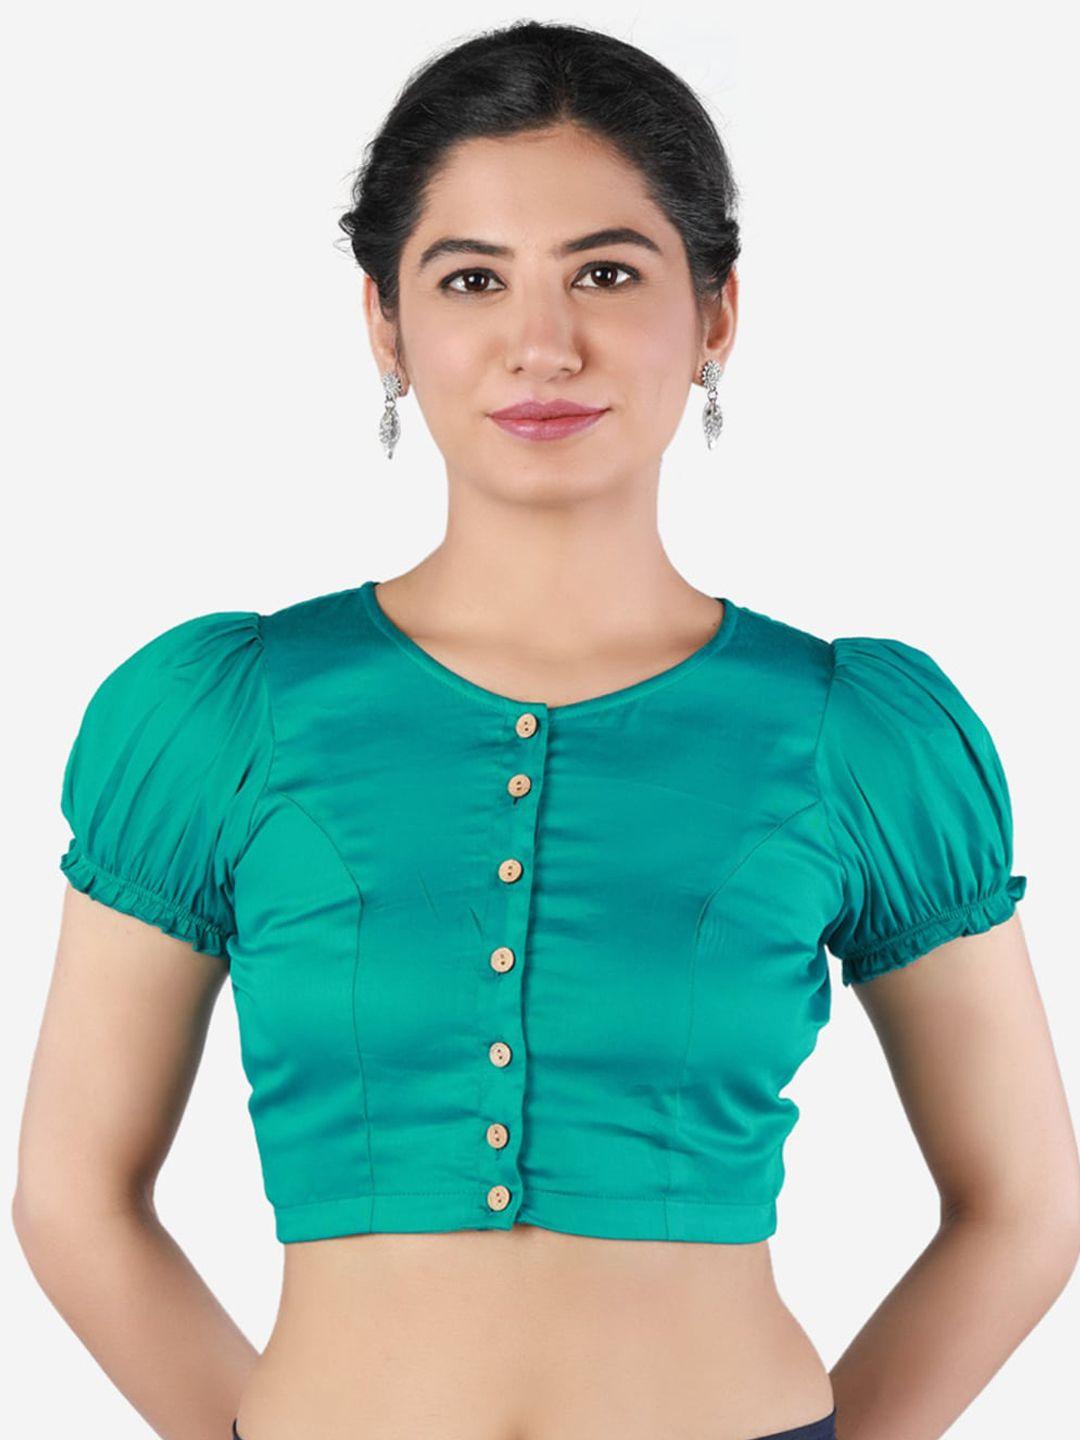 llajja women teal green solid pure cotton saree blouse